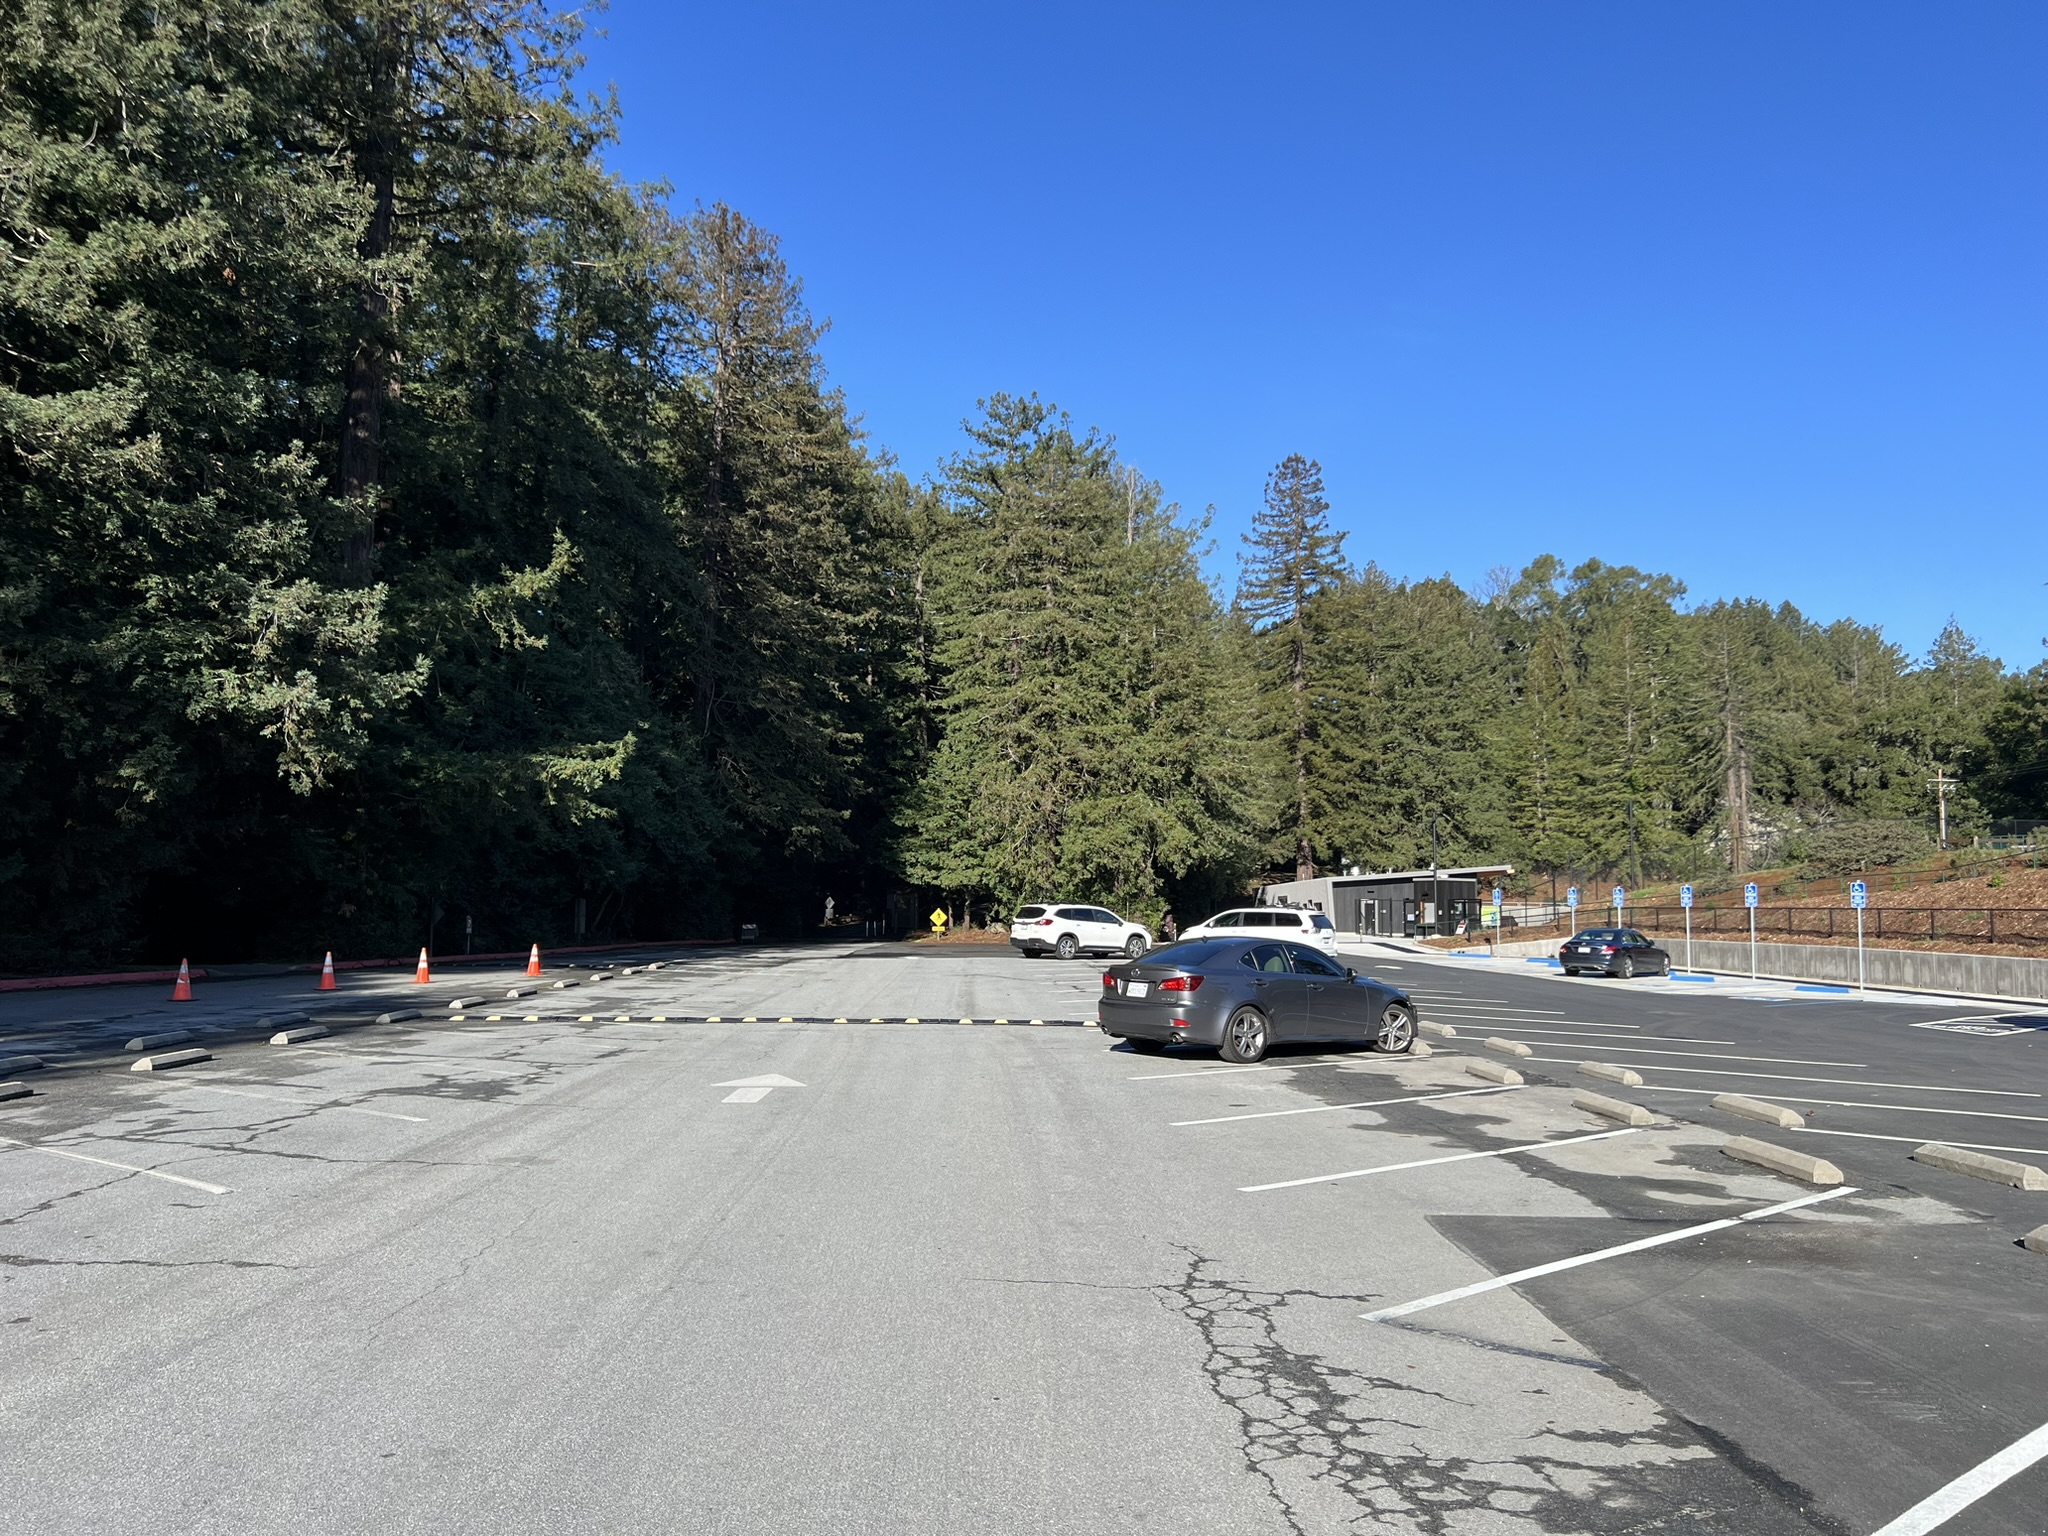 Reinhardt Redwood Regional Park 主入口的停车场停车数量并不多